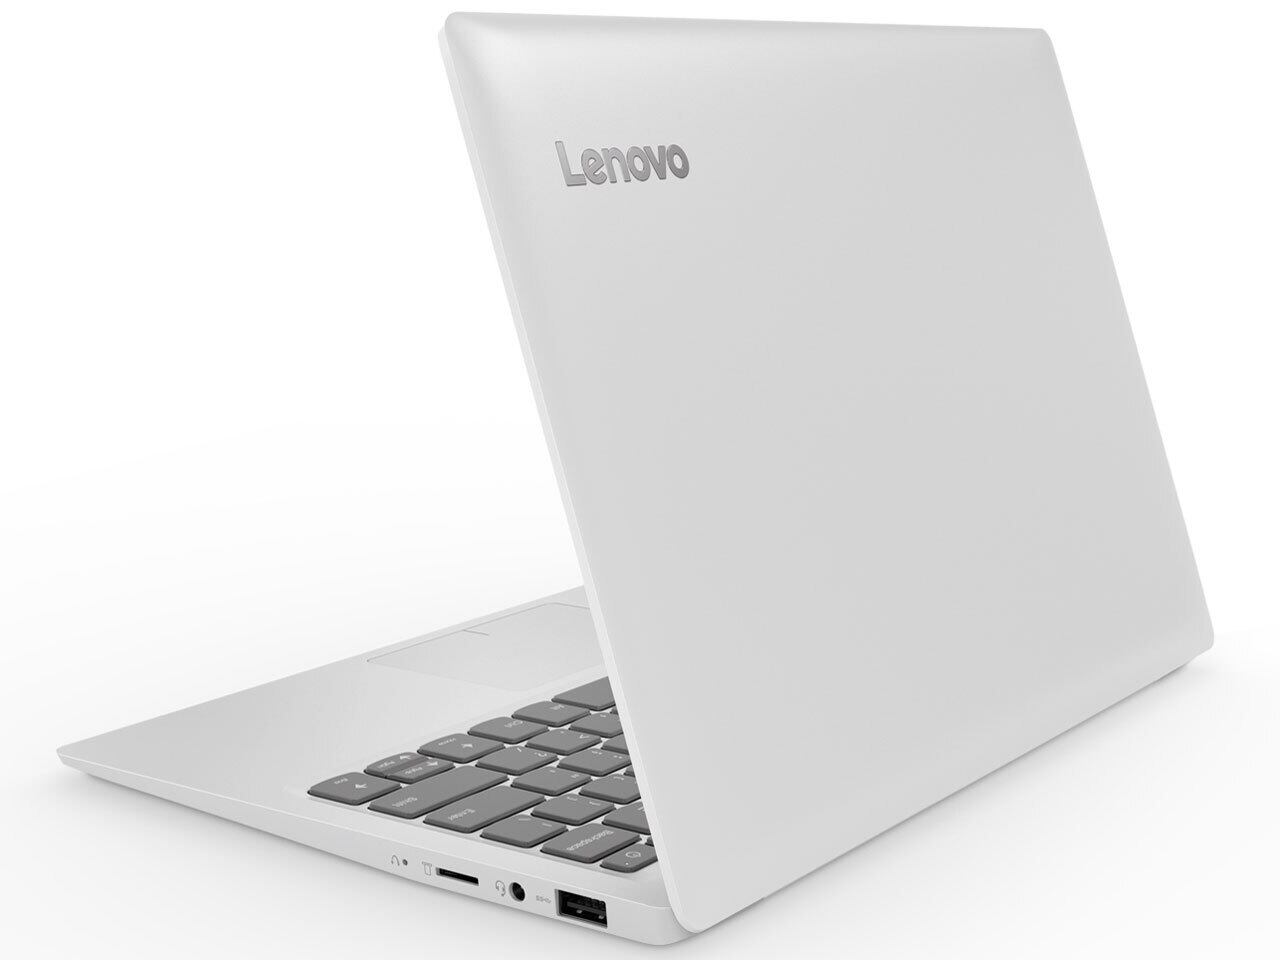 新品(店頭展示品)】Lenovo ideapad 120S-11IAP 81A400F3JP Win10Pro ...